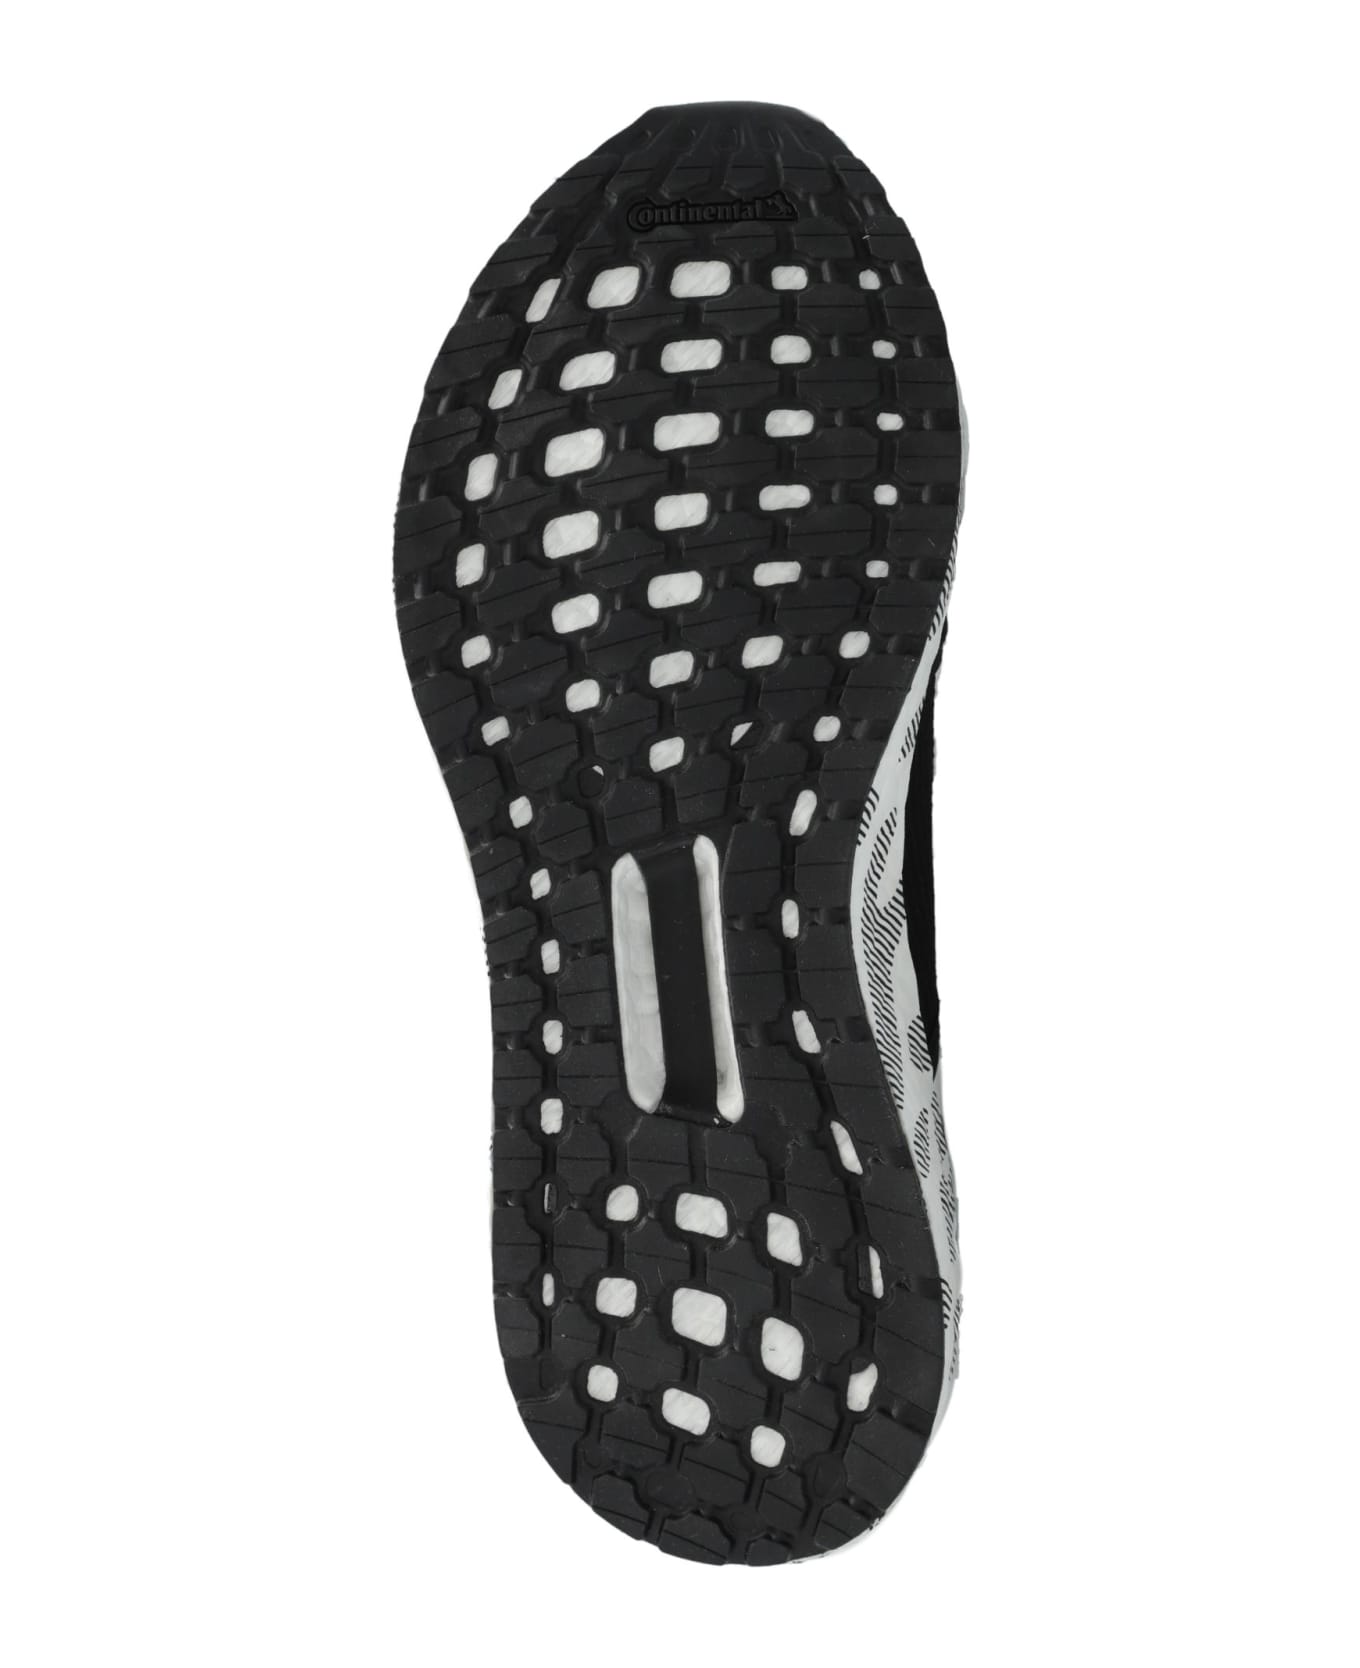 Adidas by Stella McCartney 'ultraboost 20' Sneakers - Black White スニーカー